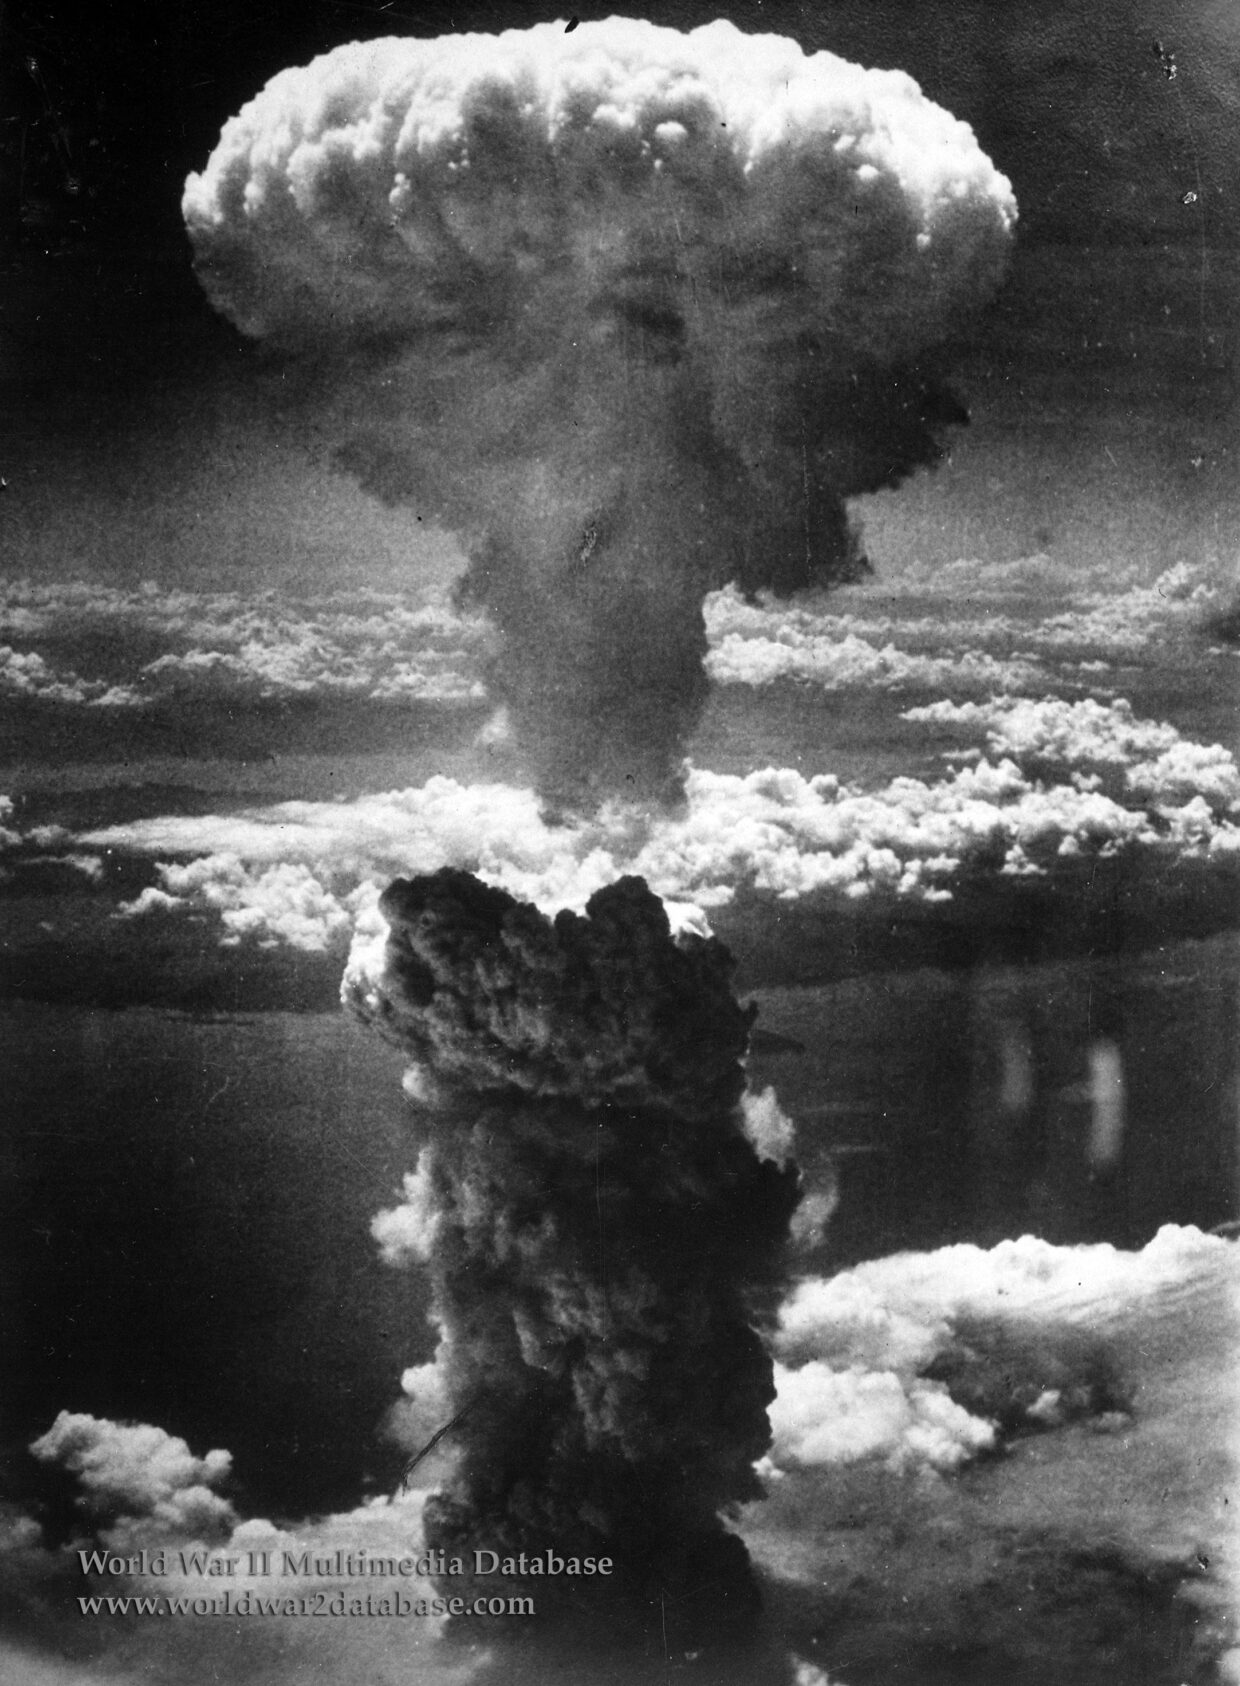 “Fat Man“ Atomic Bomb Explodes Over Nagasaki